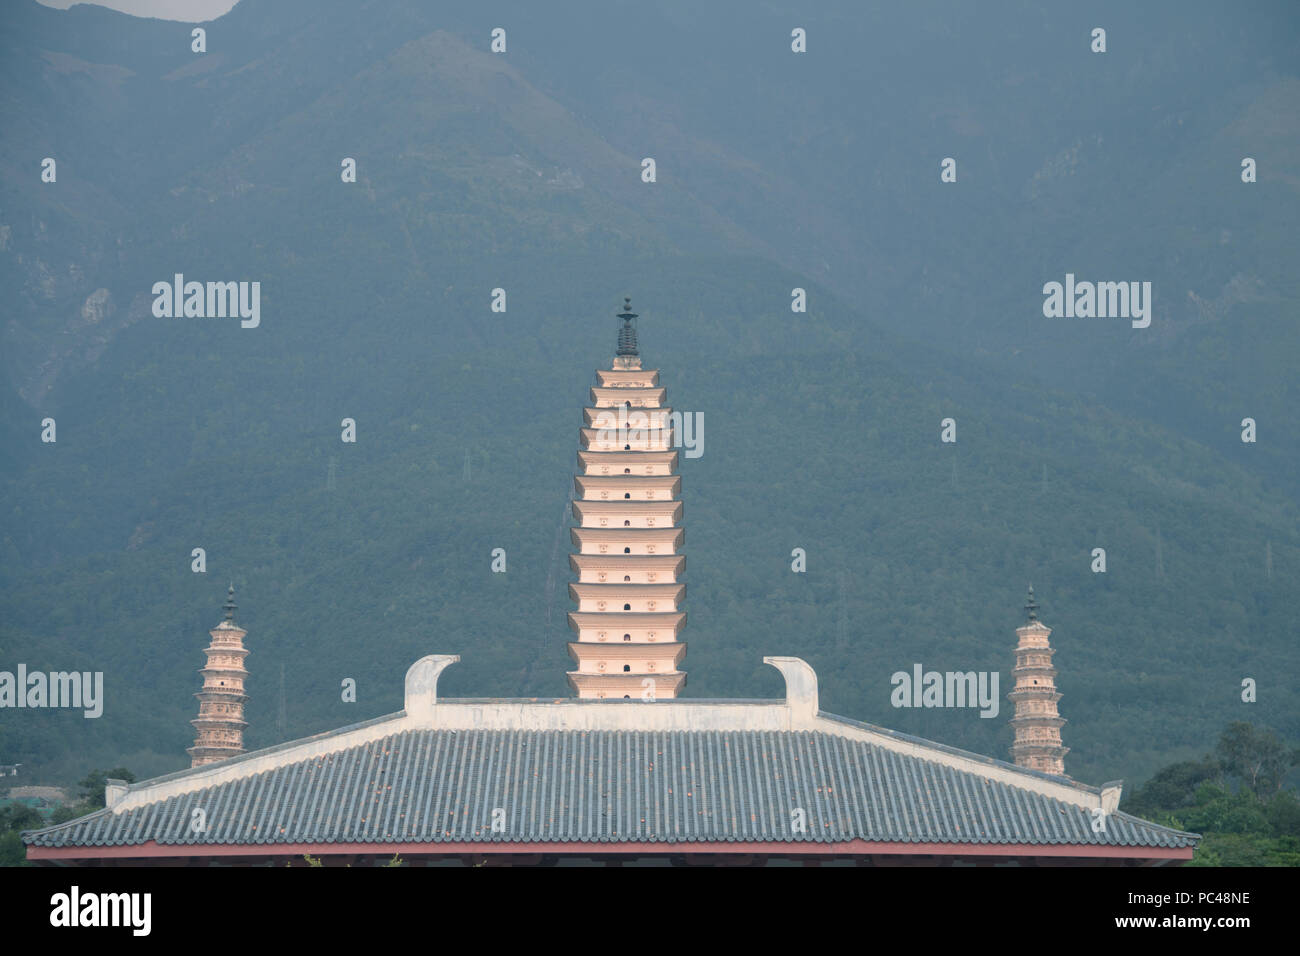 Dali Three Towers in Yunnan, China Stock Photo